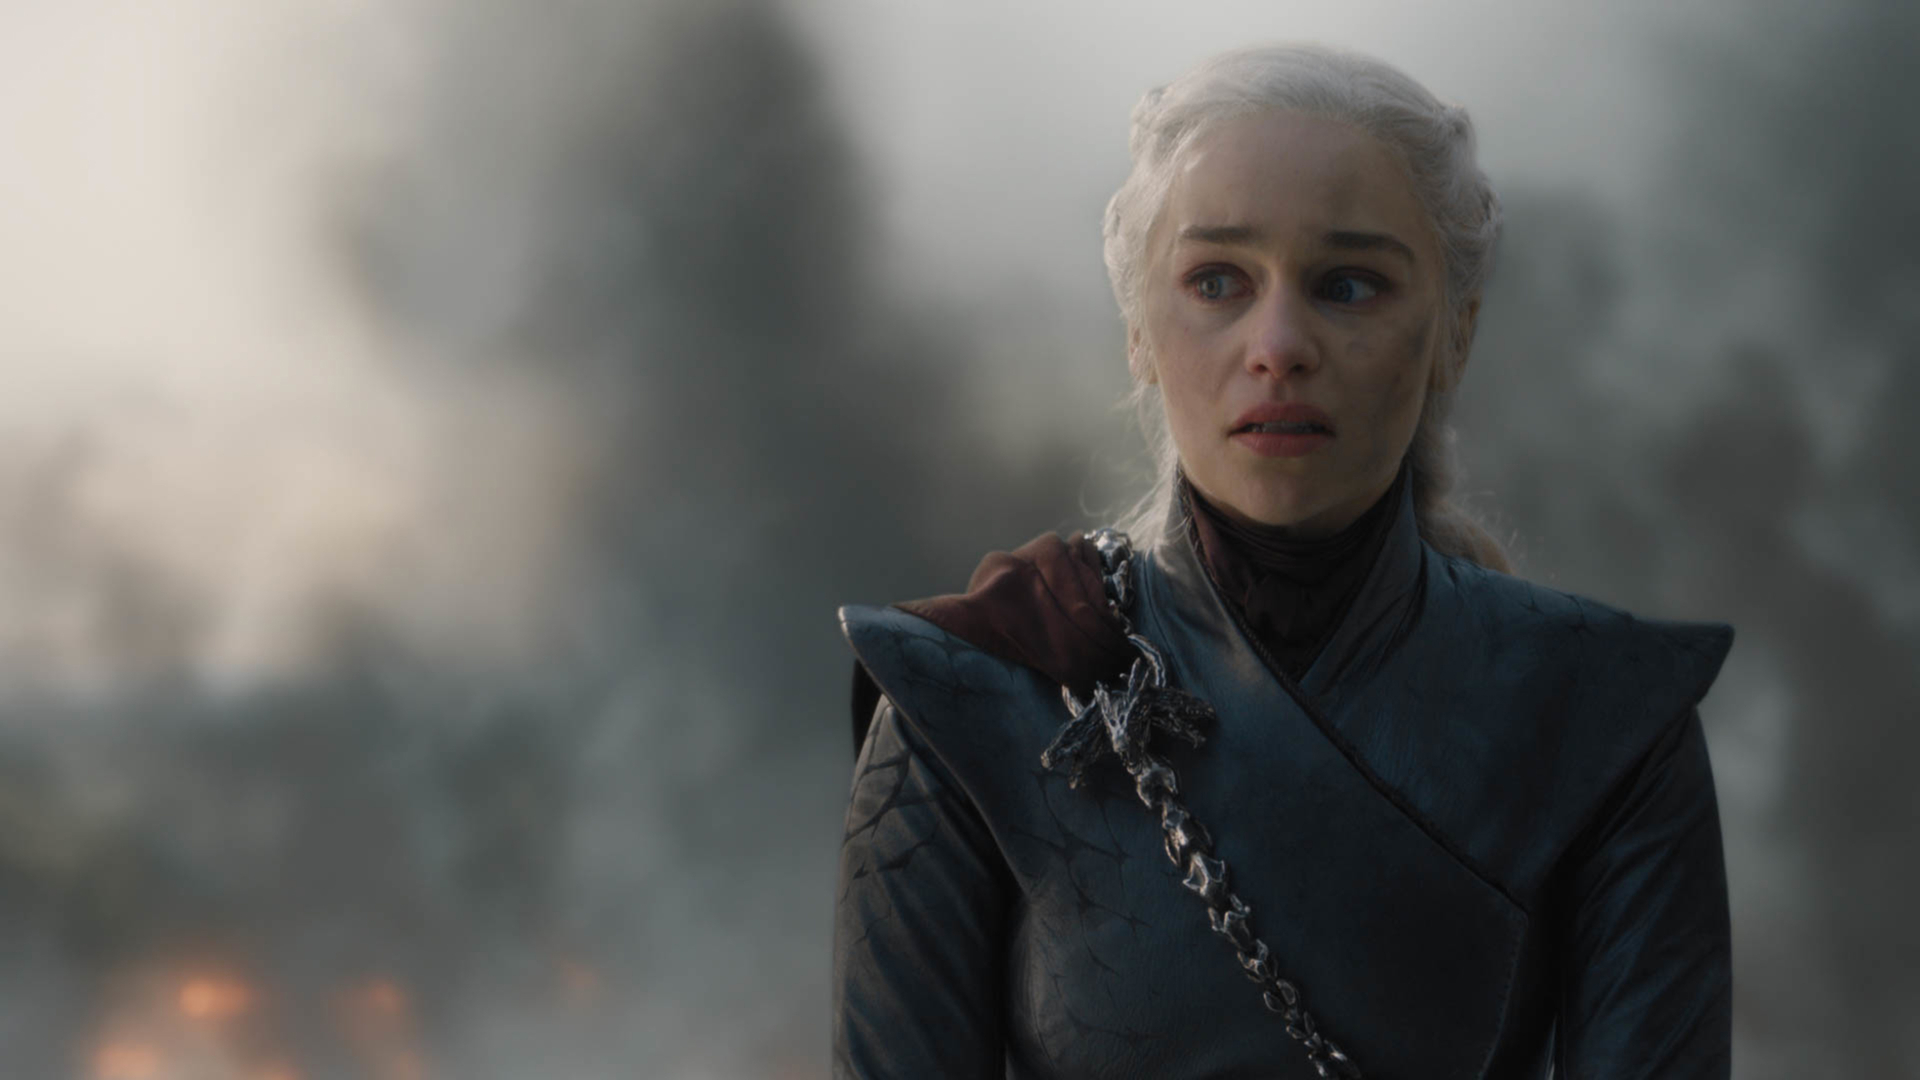 Emilia Clarke HBO Game of Thrones Season 8 - Episode 5